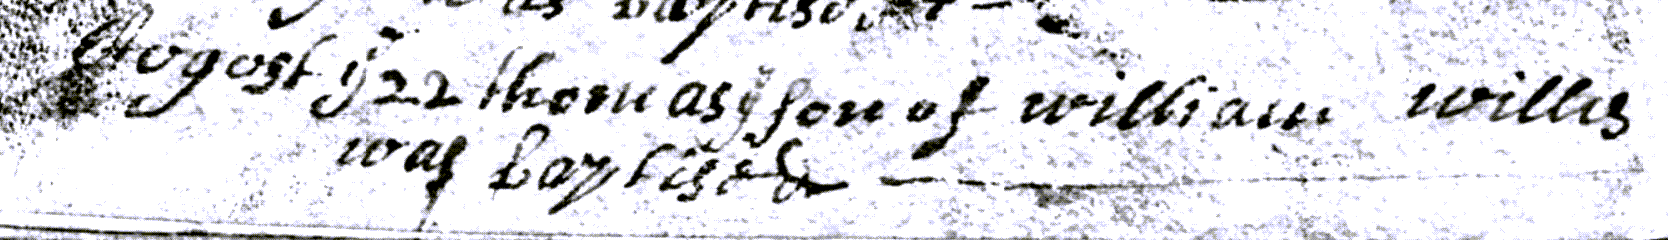 Figure 1: Baptism Register Entry for Thomas Willis